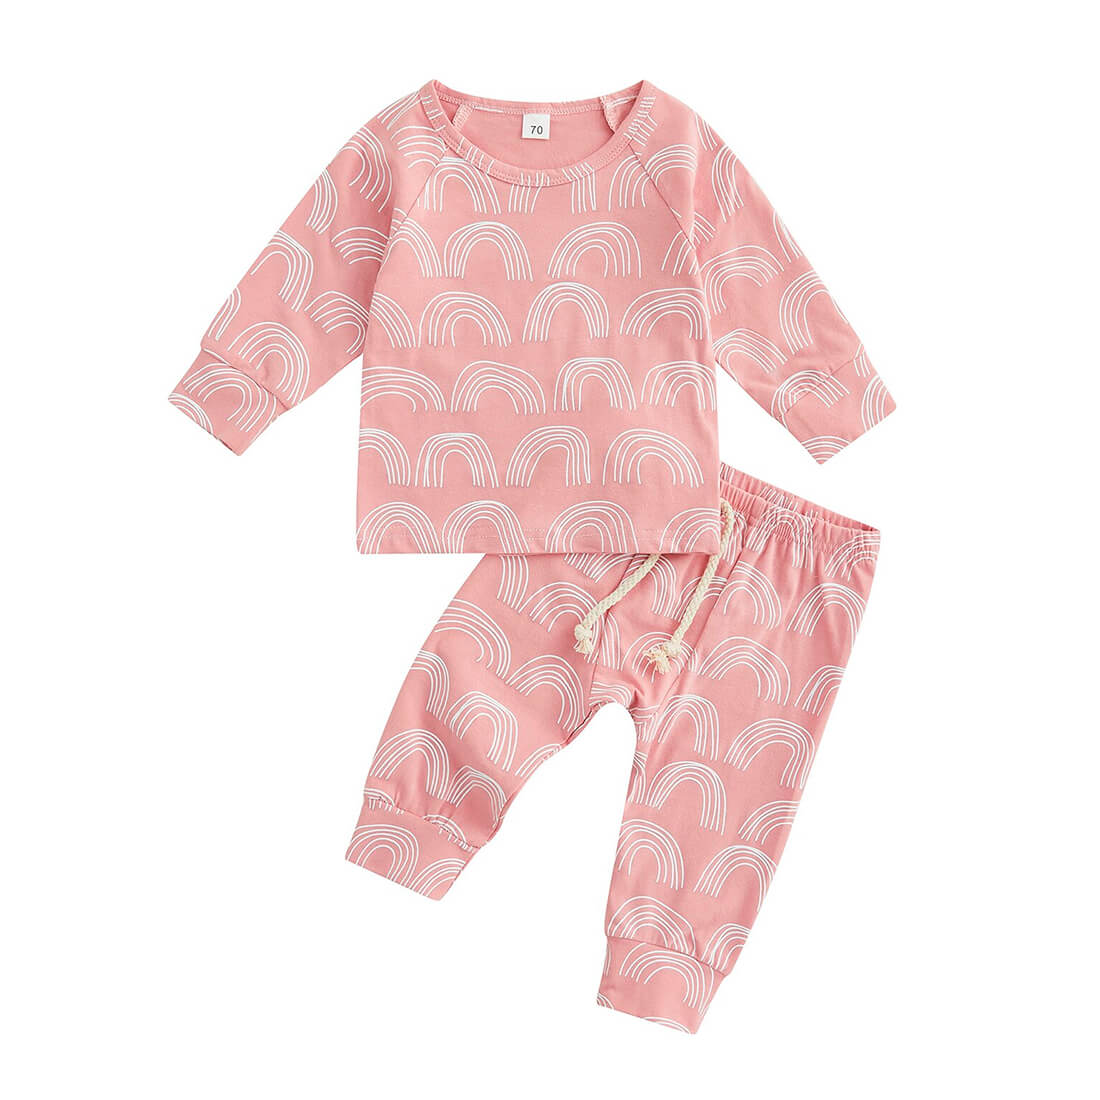 Solid Rainbow Baby Pajama Set Pink 3-6 M 